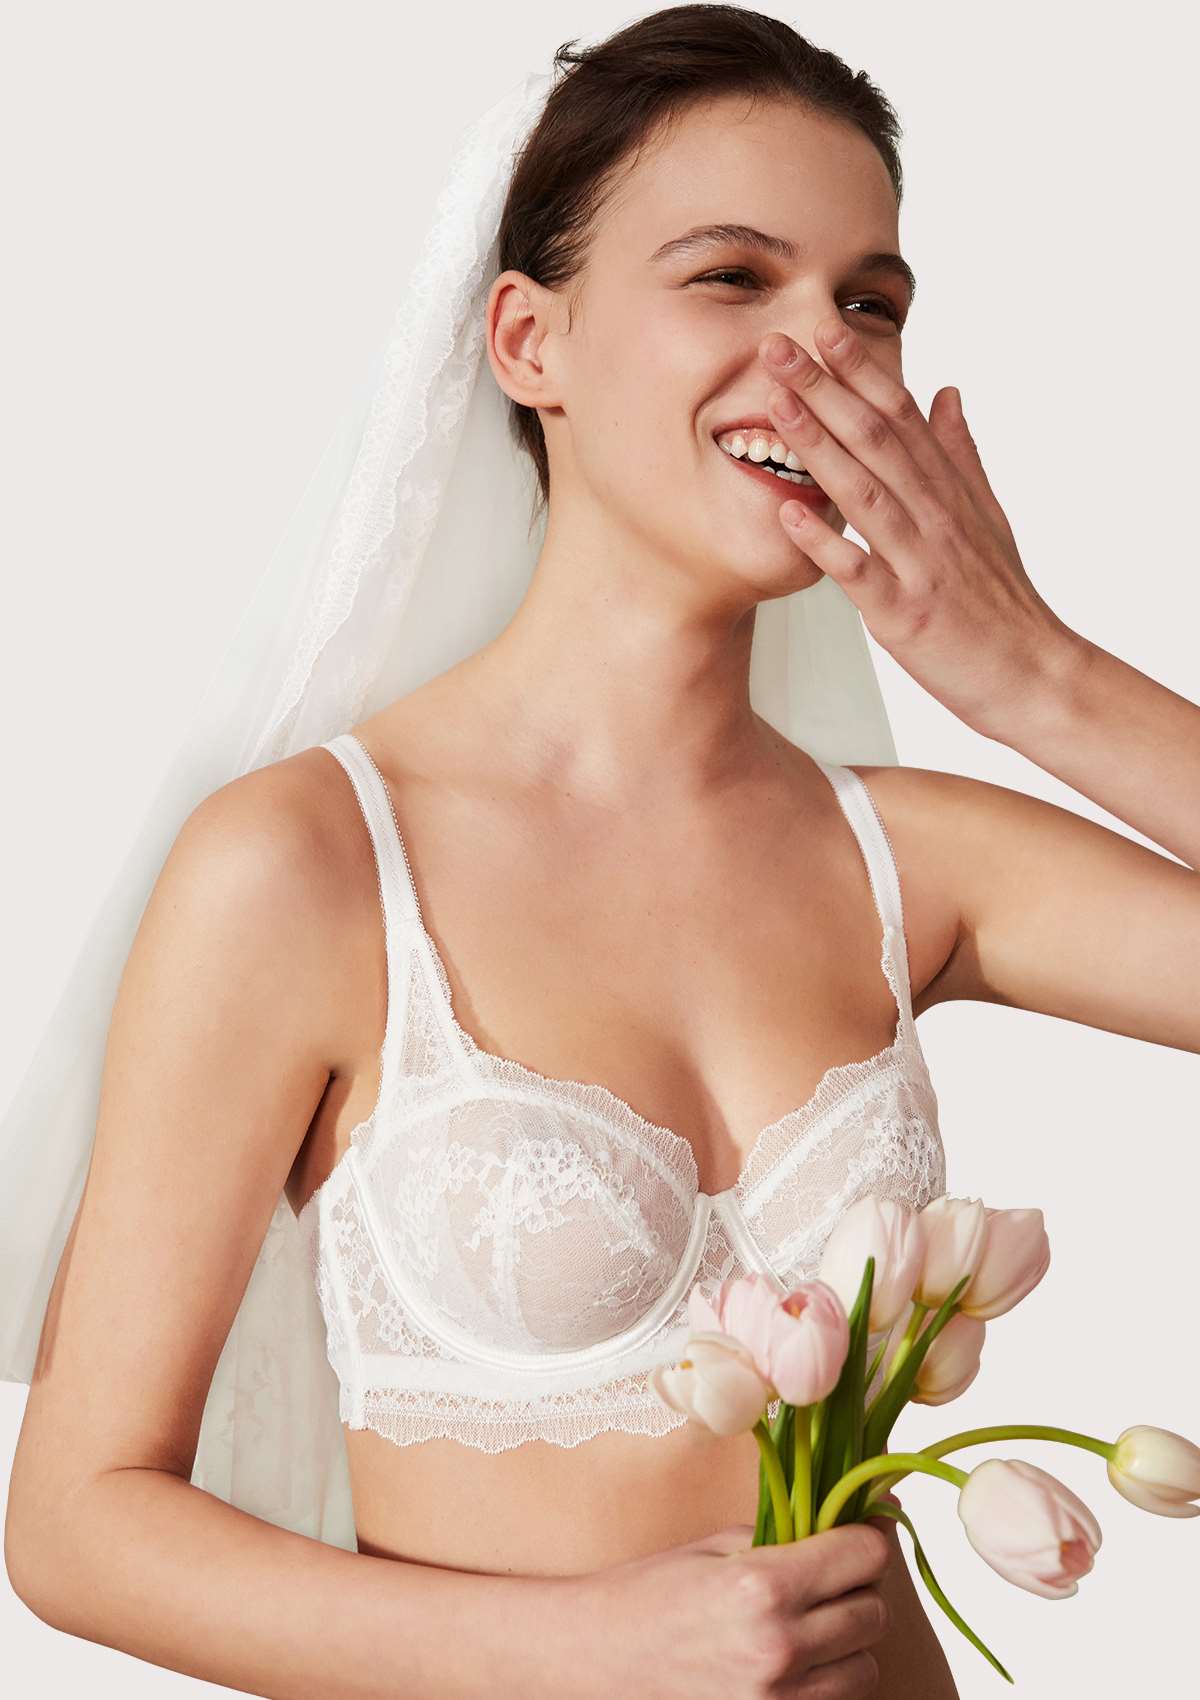 HSIA Floral Lace Unlined Bridal Romantic Balconette Bra Panty Set  - White / 36 / DDD/F